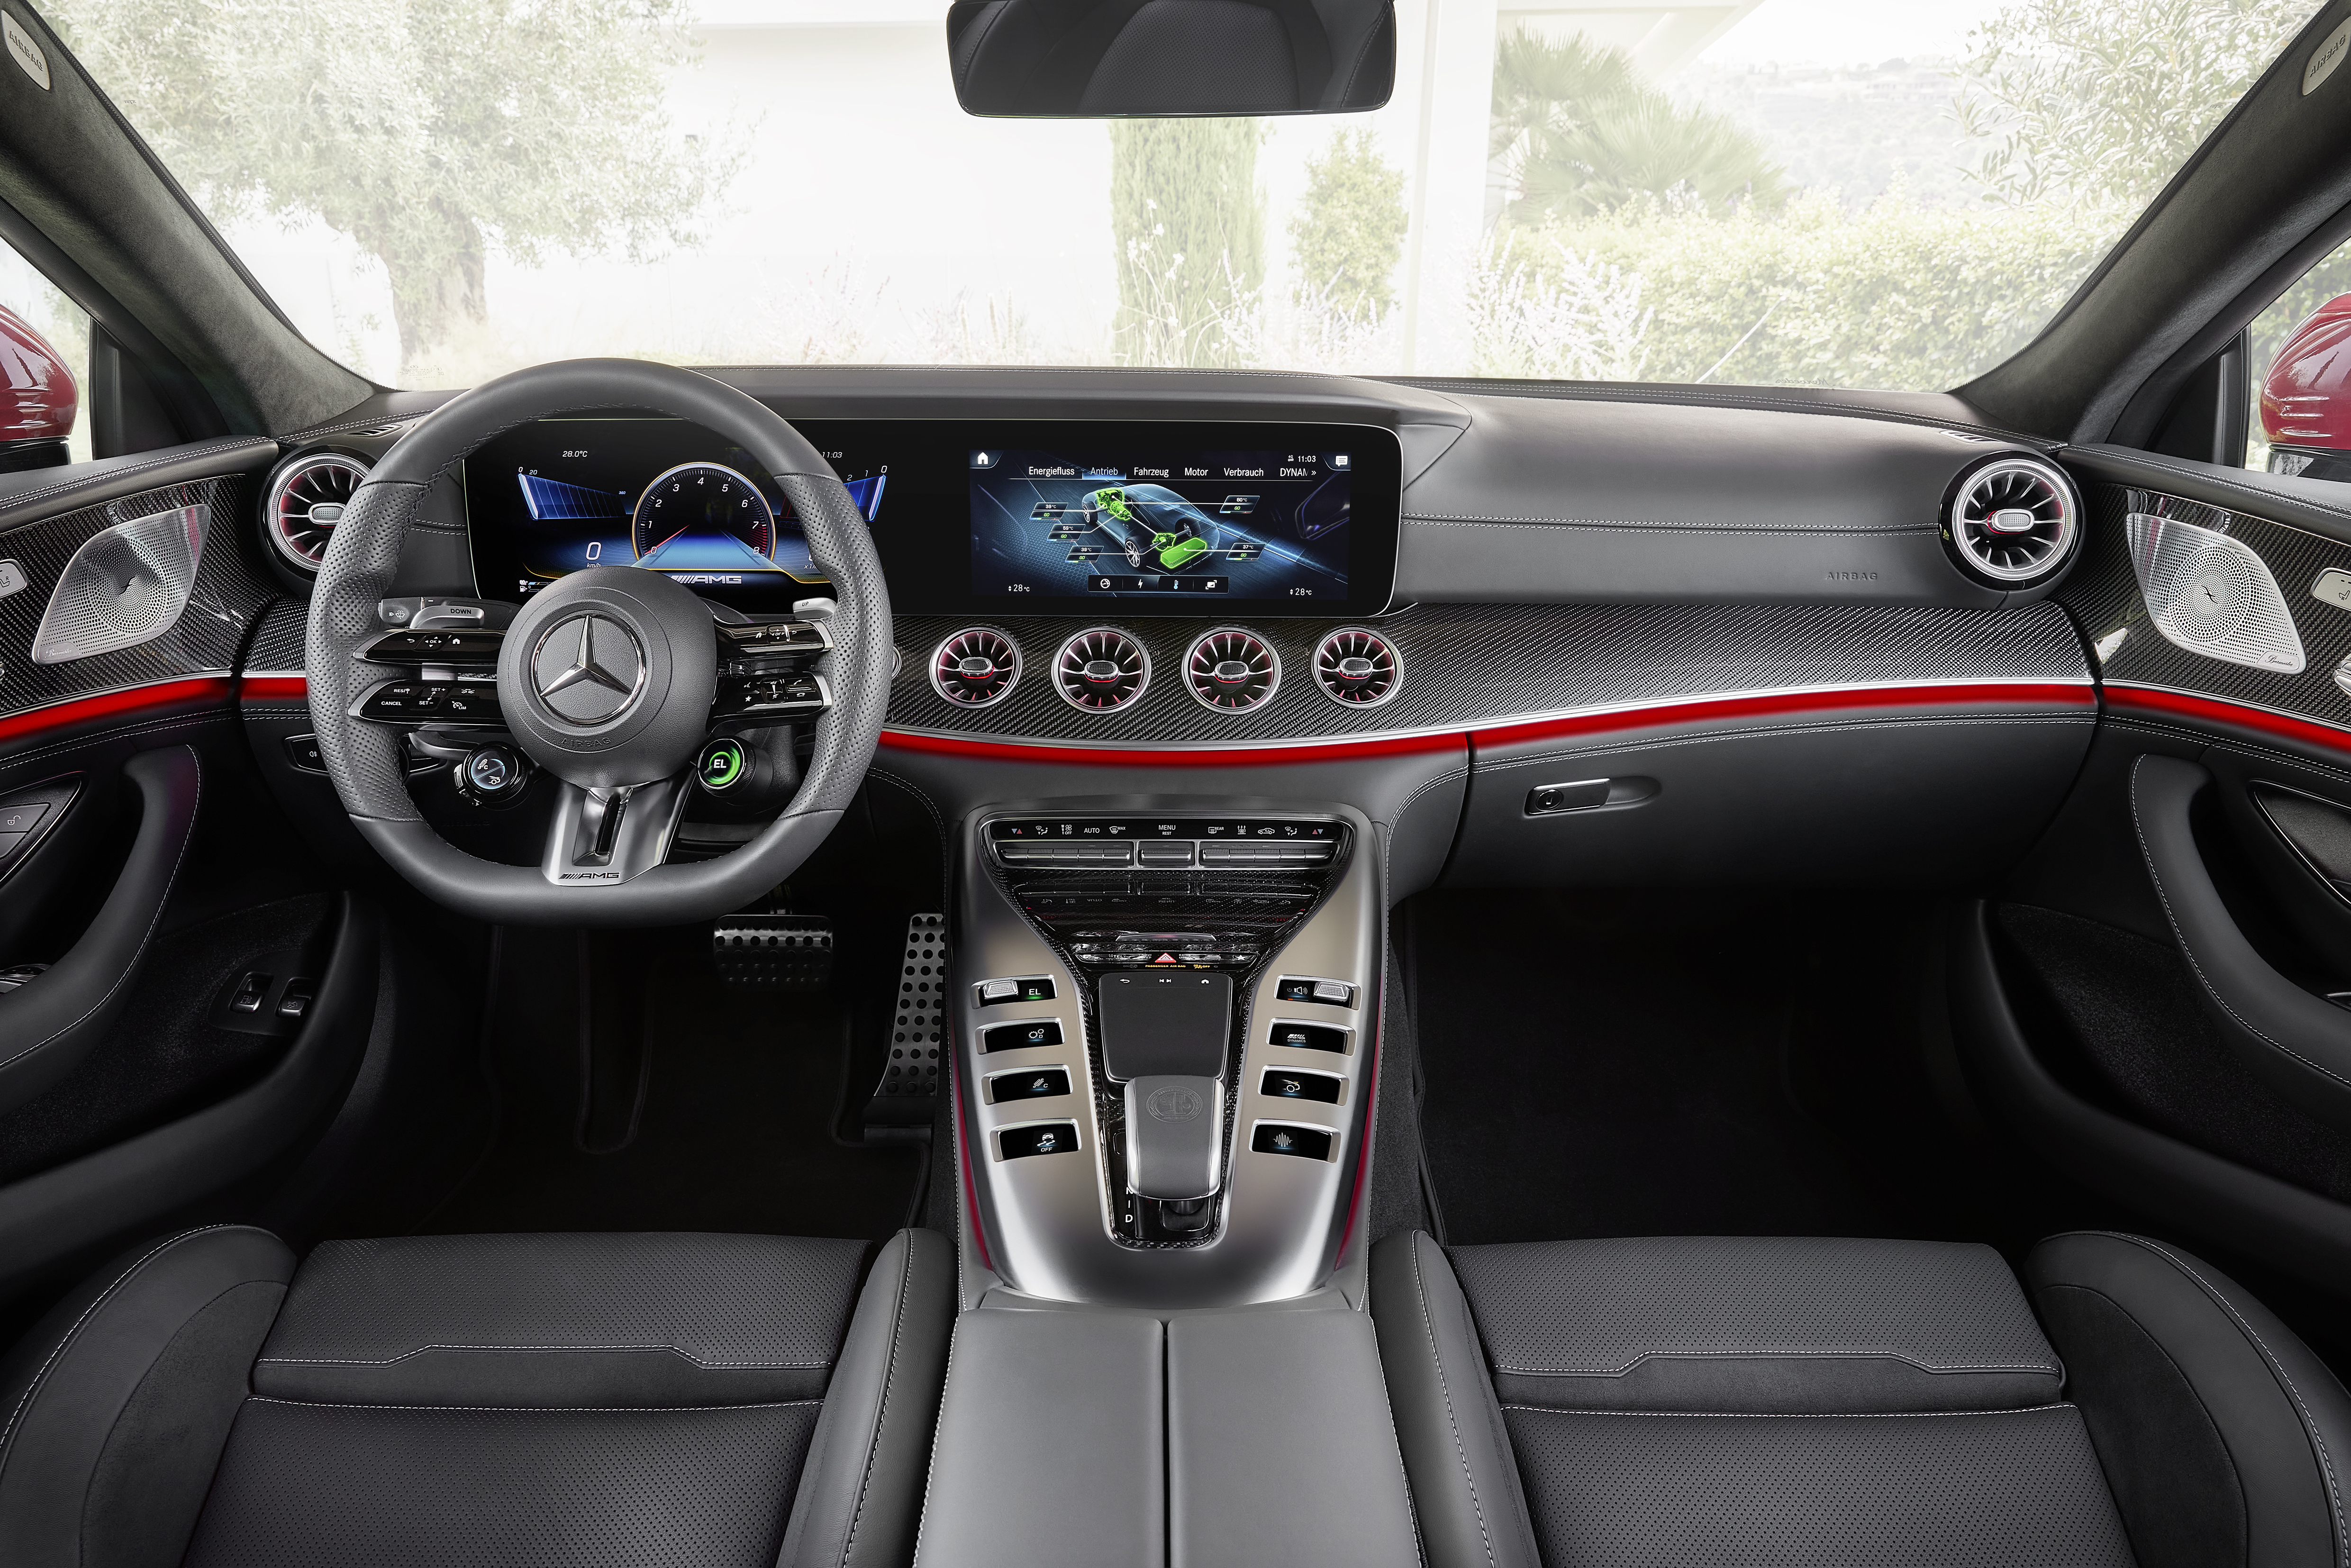 Mercedes-AMG GT 63 S E PERFORMANCE (4MATIC+), 2021Mercedes-AMG GT 63 S E PERFORMANCE (4MATIC+), 2021